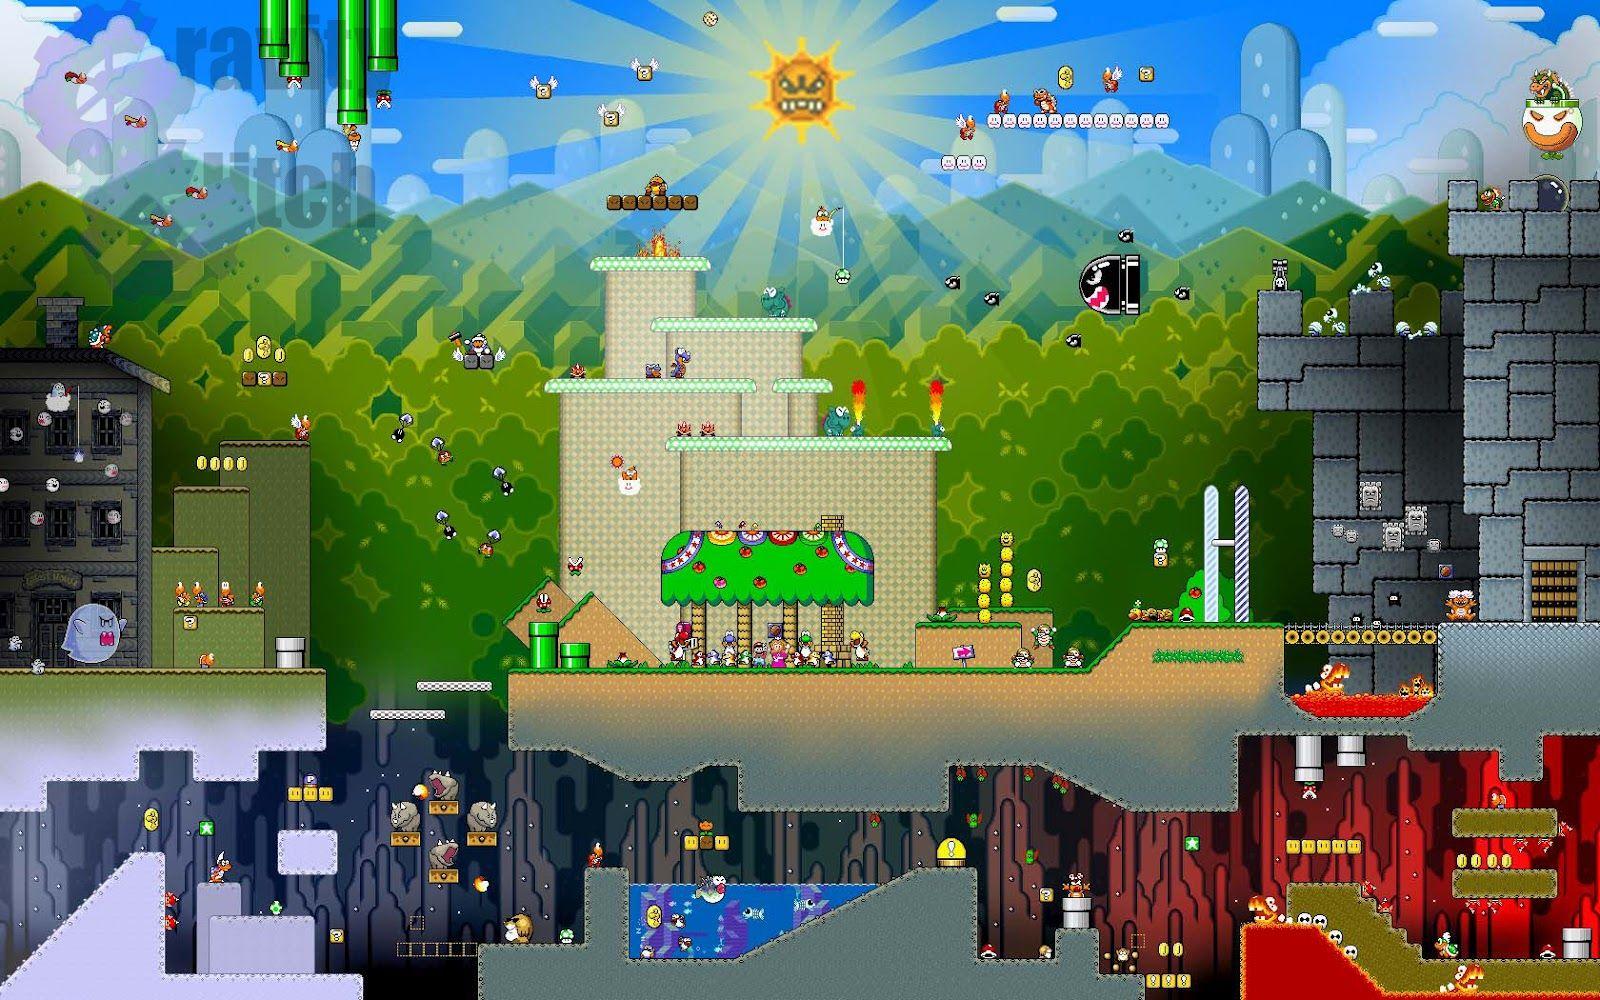 Super mario world 2: yoshi's island is a 1995 platform video game